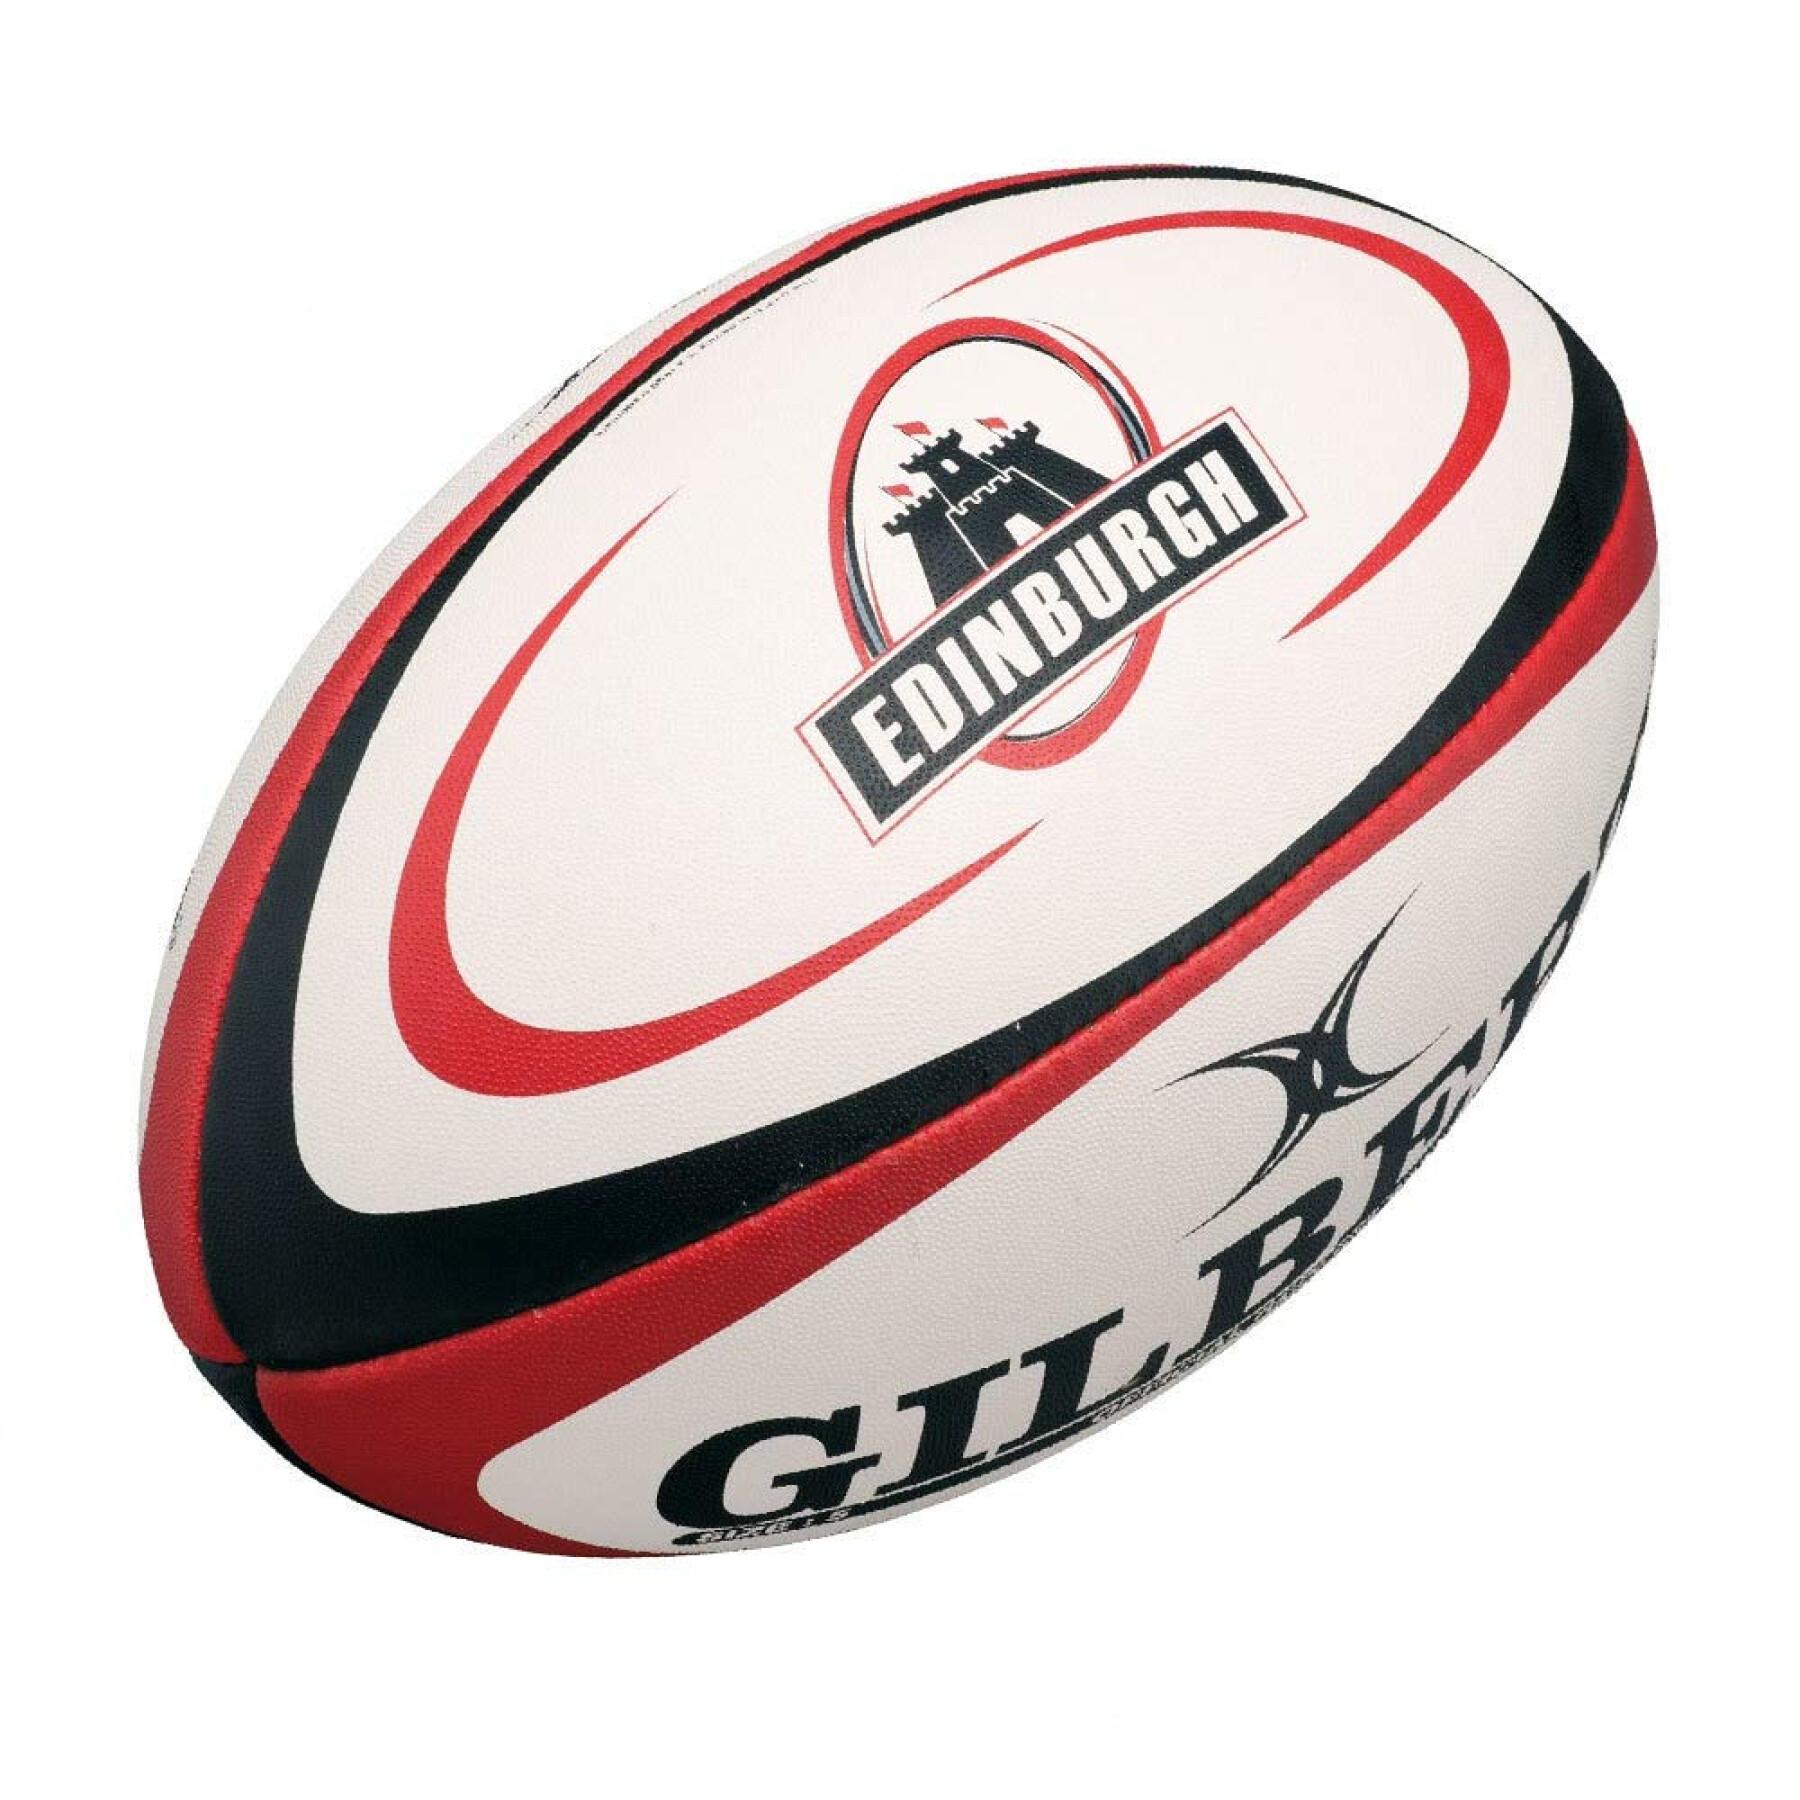 Ballon de rugby midi Gilbert Edimbourg (taille 2)